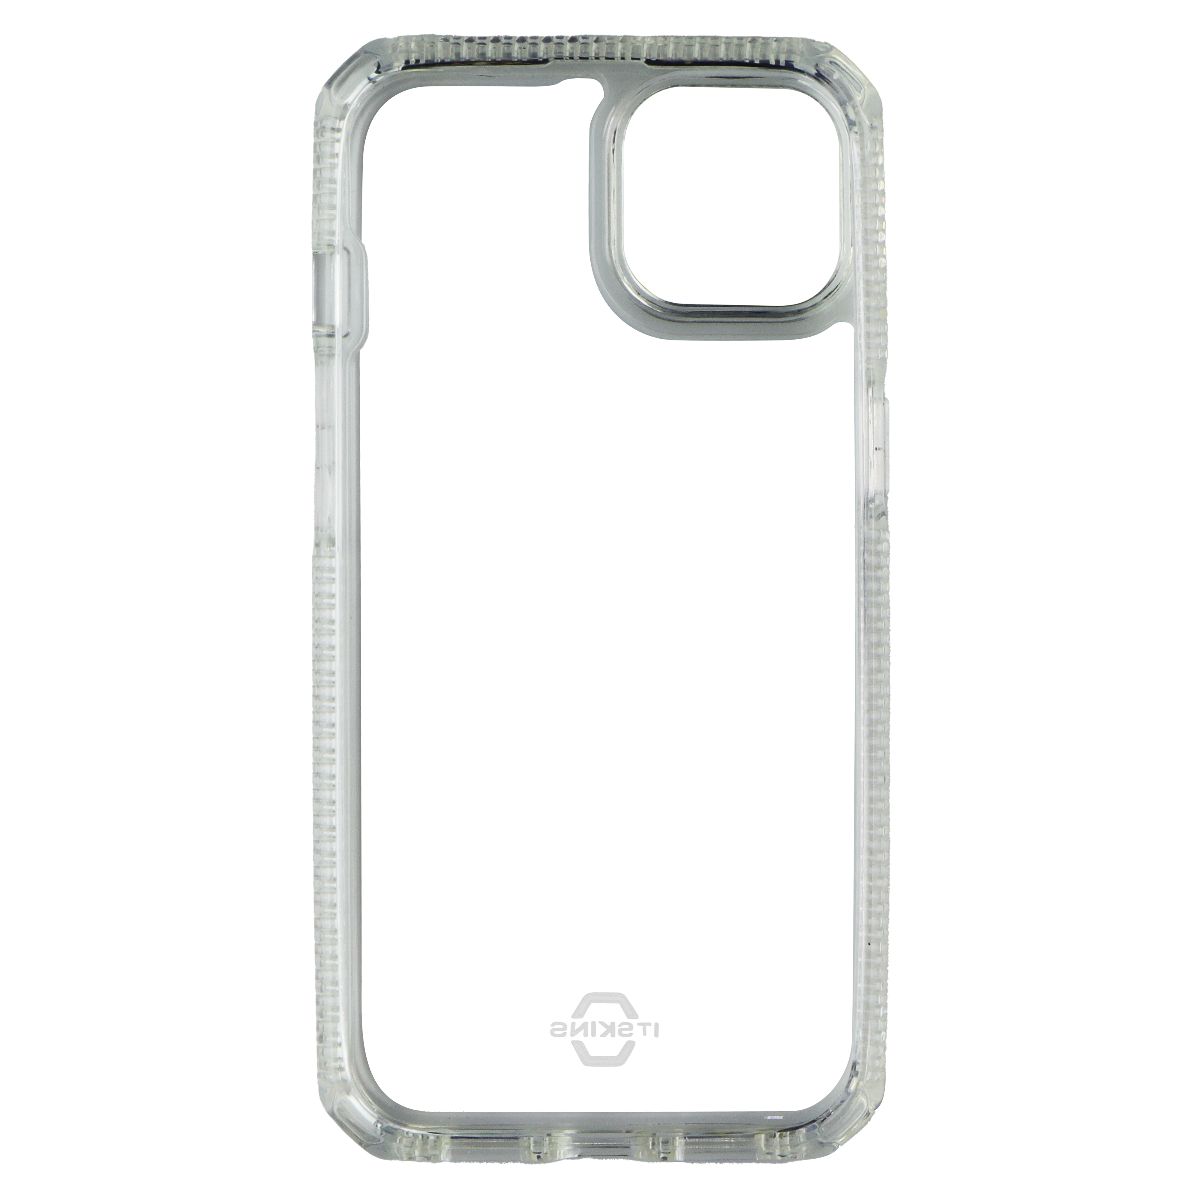 ITSKINS Hybrid Clear Series Case for Apple iPhone 13 - Clear Cell Phone - Cases, Covers & Skins ITSKINS    - Simple Cell Bulk Wholesale Pricing - USA Seller